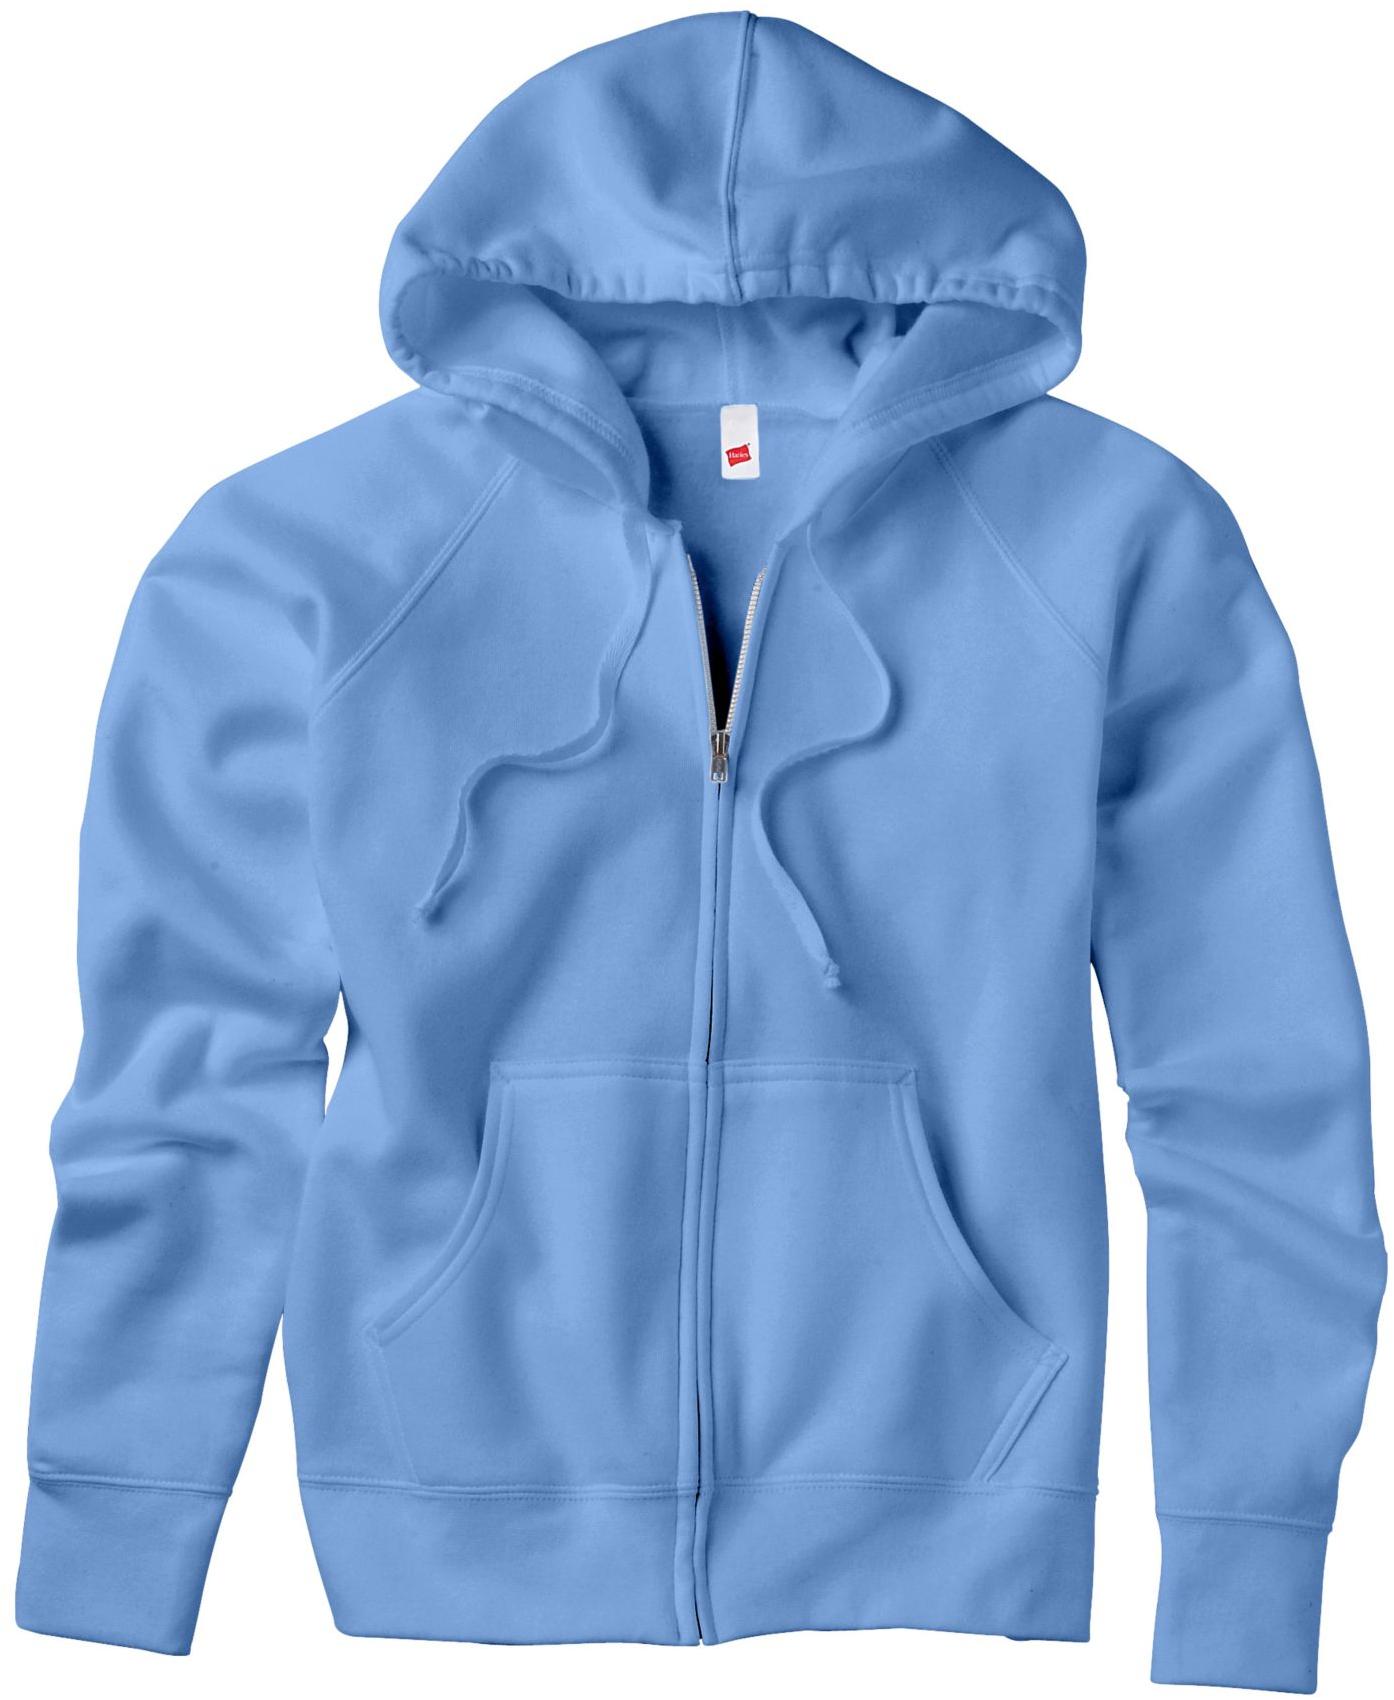 Hanes EcoSmart Cotton Rich Full Zip Hoodie Women's Sweatshirt W280 | eBay